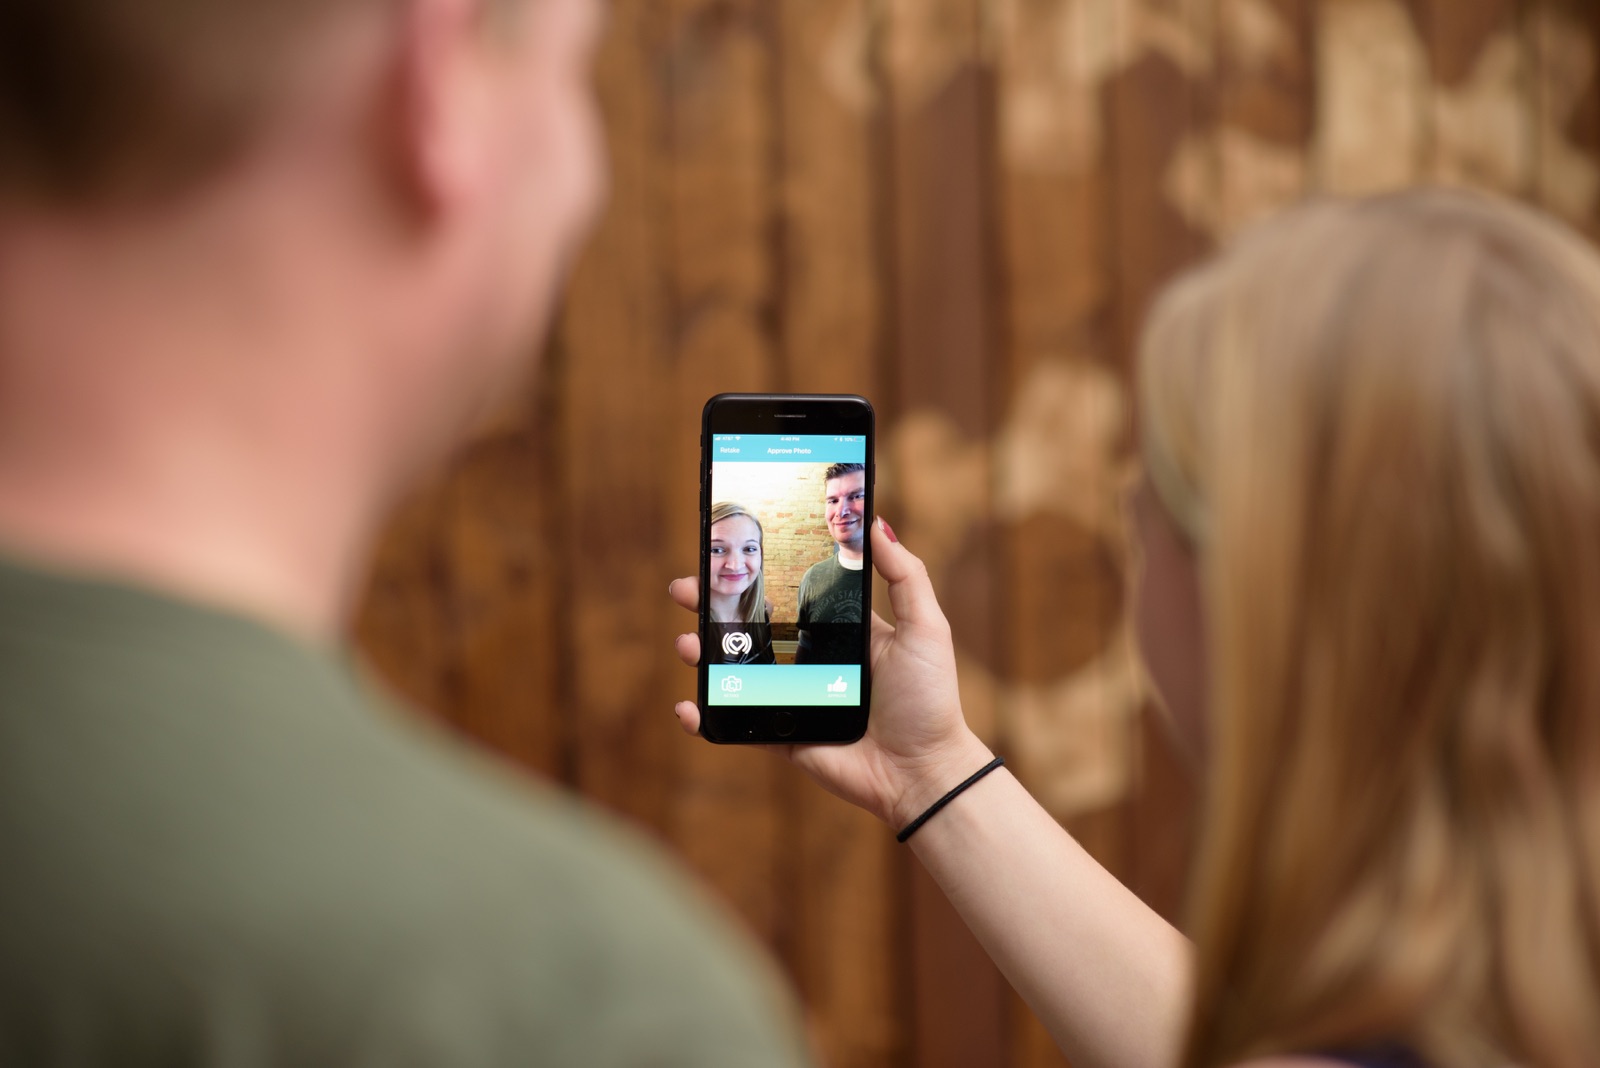 A selfie taken using the EchoPix iPhone app